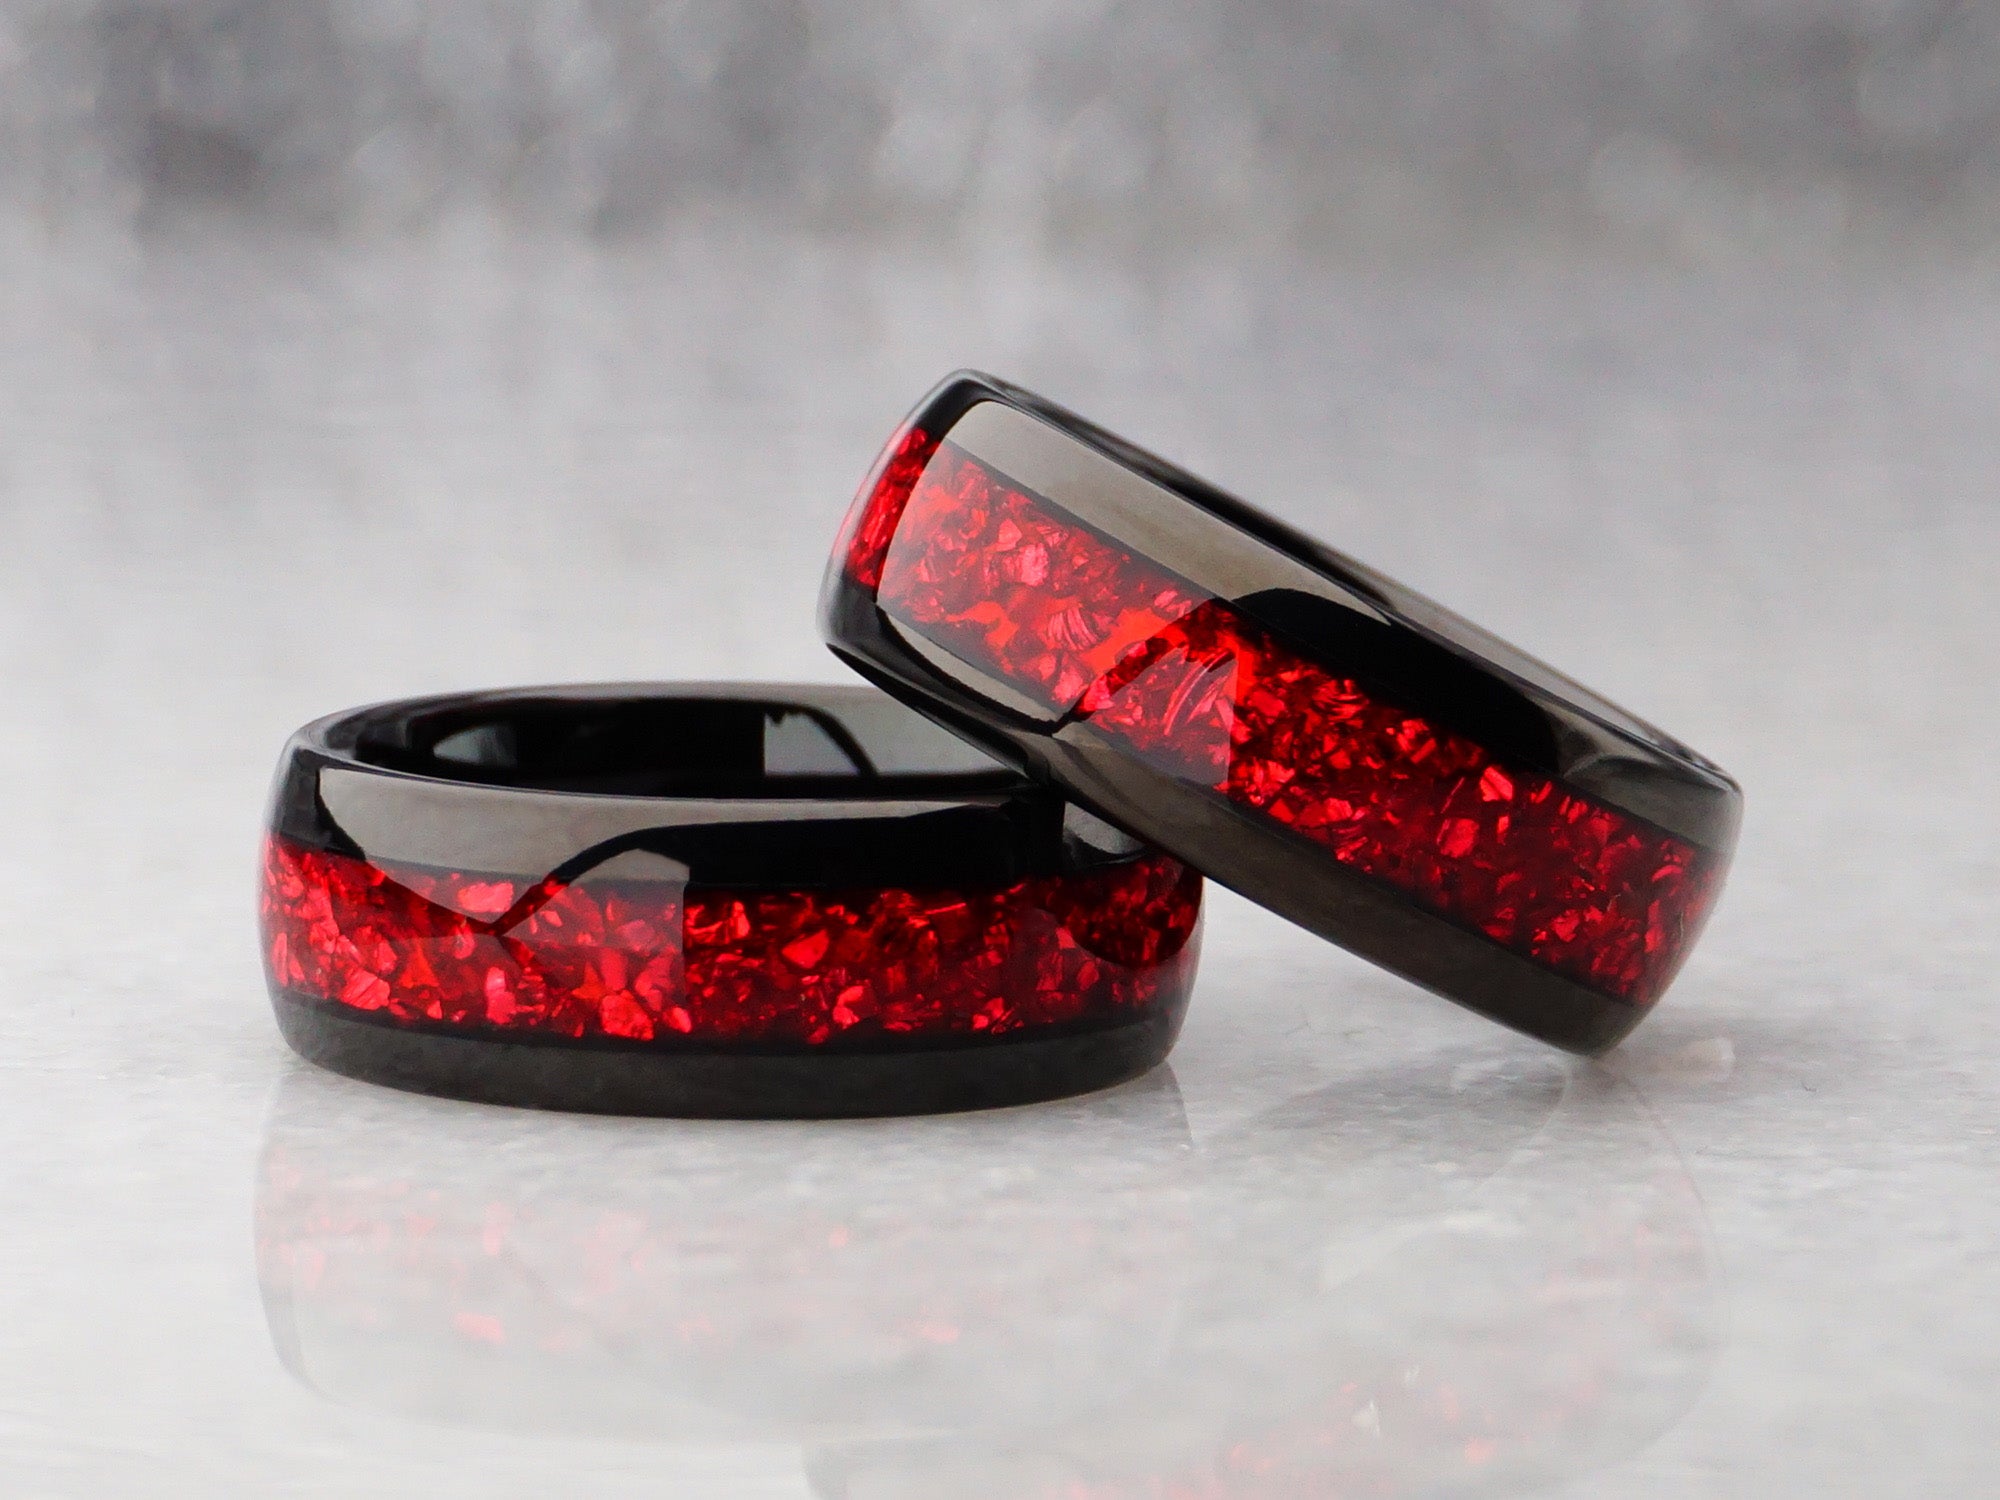 8mm red garnet ring, polished black tungsten ring with lab garnet gemstone inlay, modern mens wedding ring